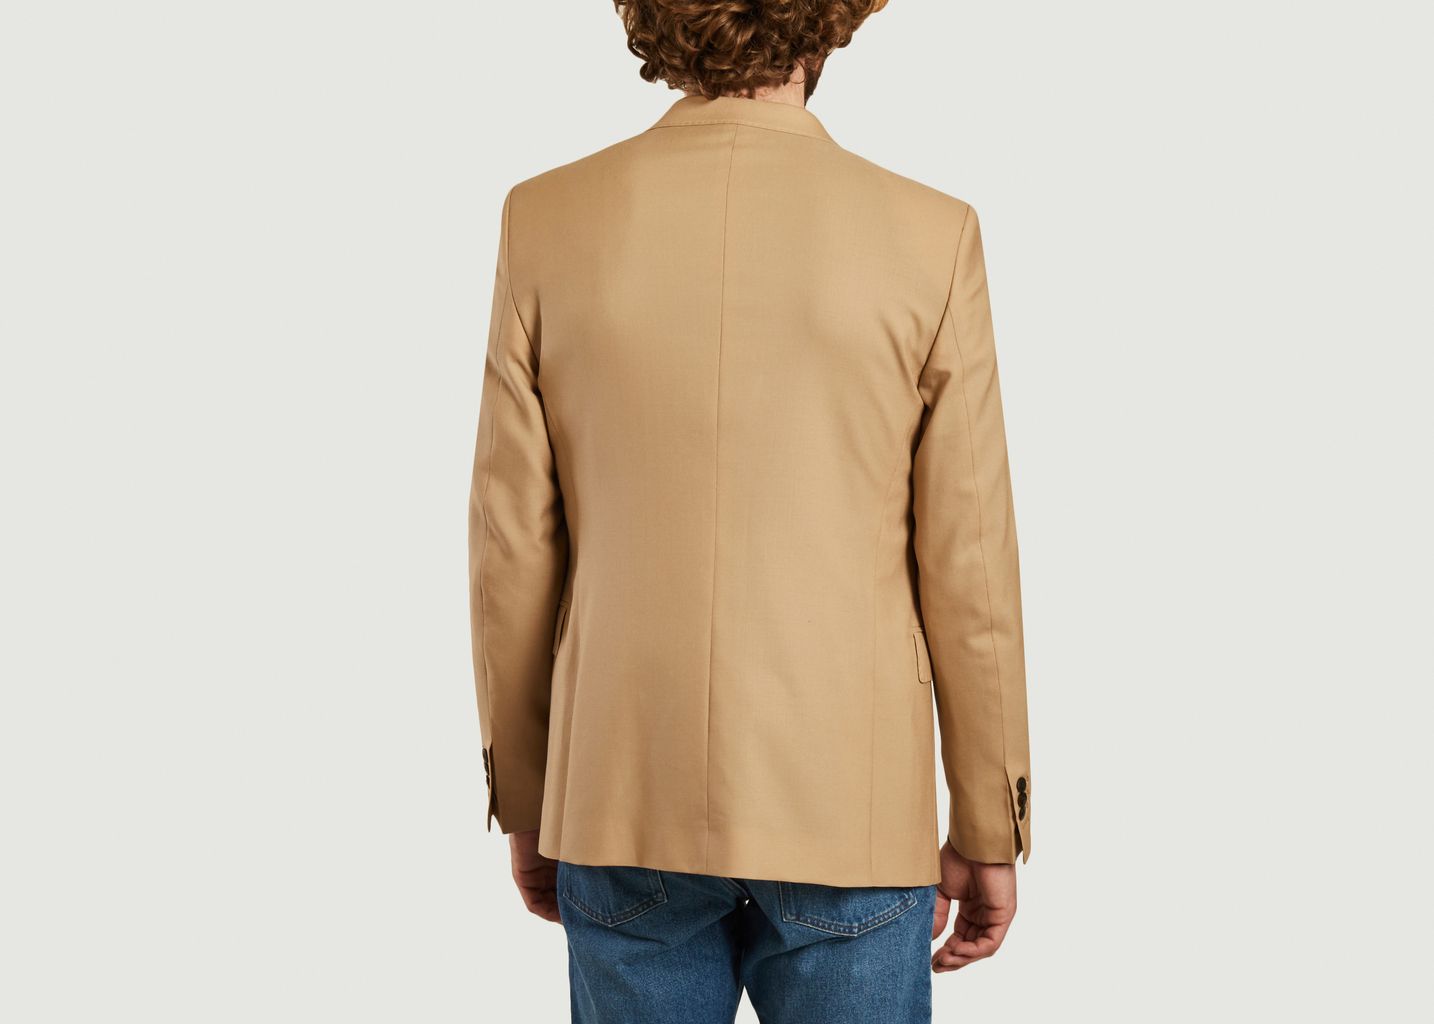 Two-button jacket - AMI Paris